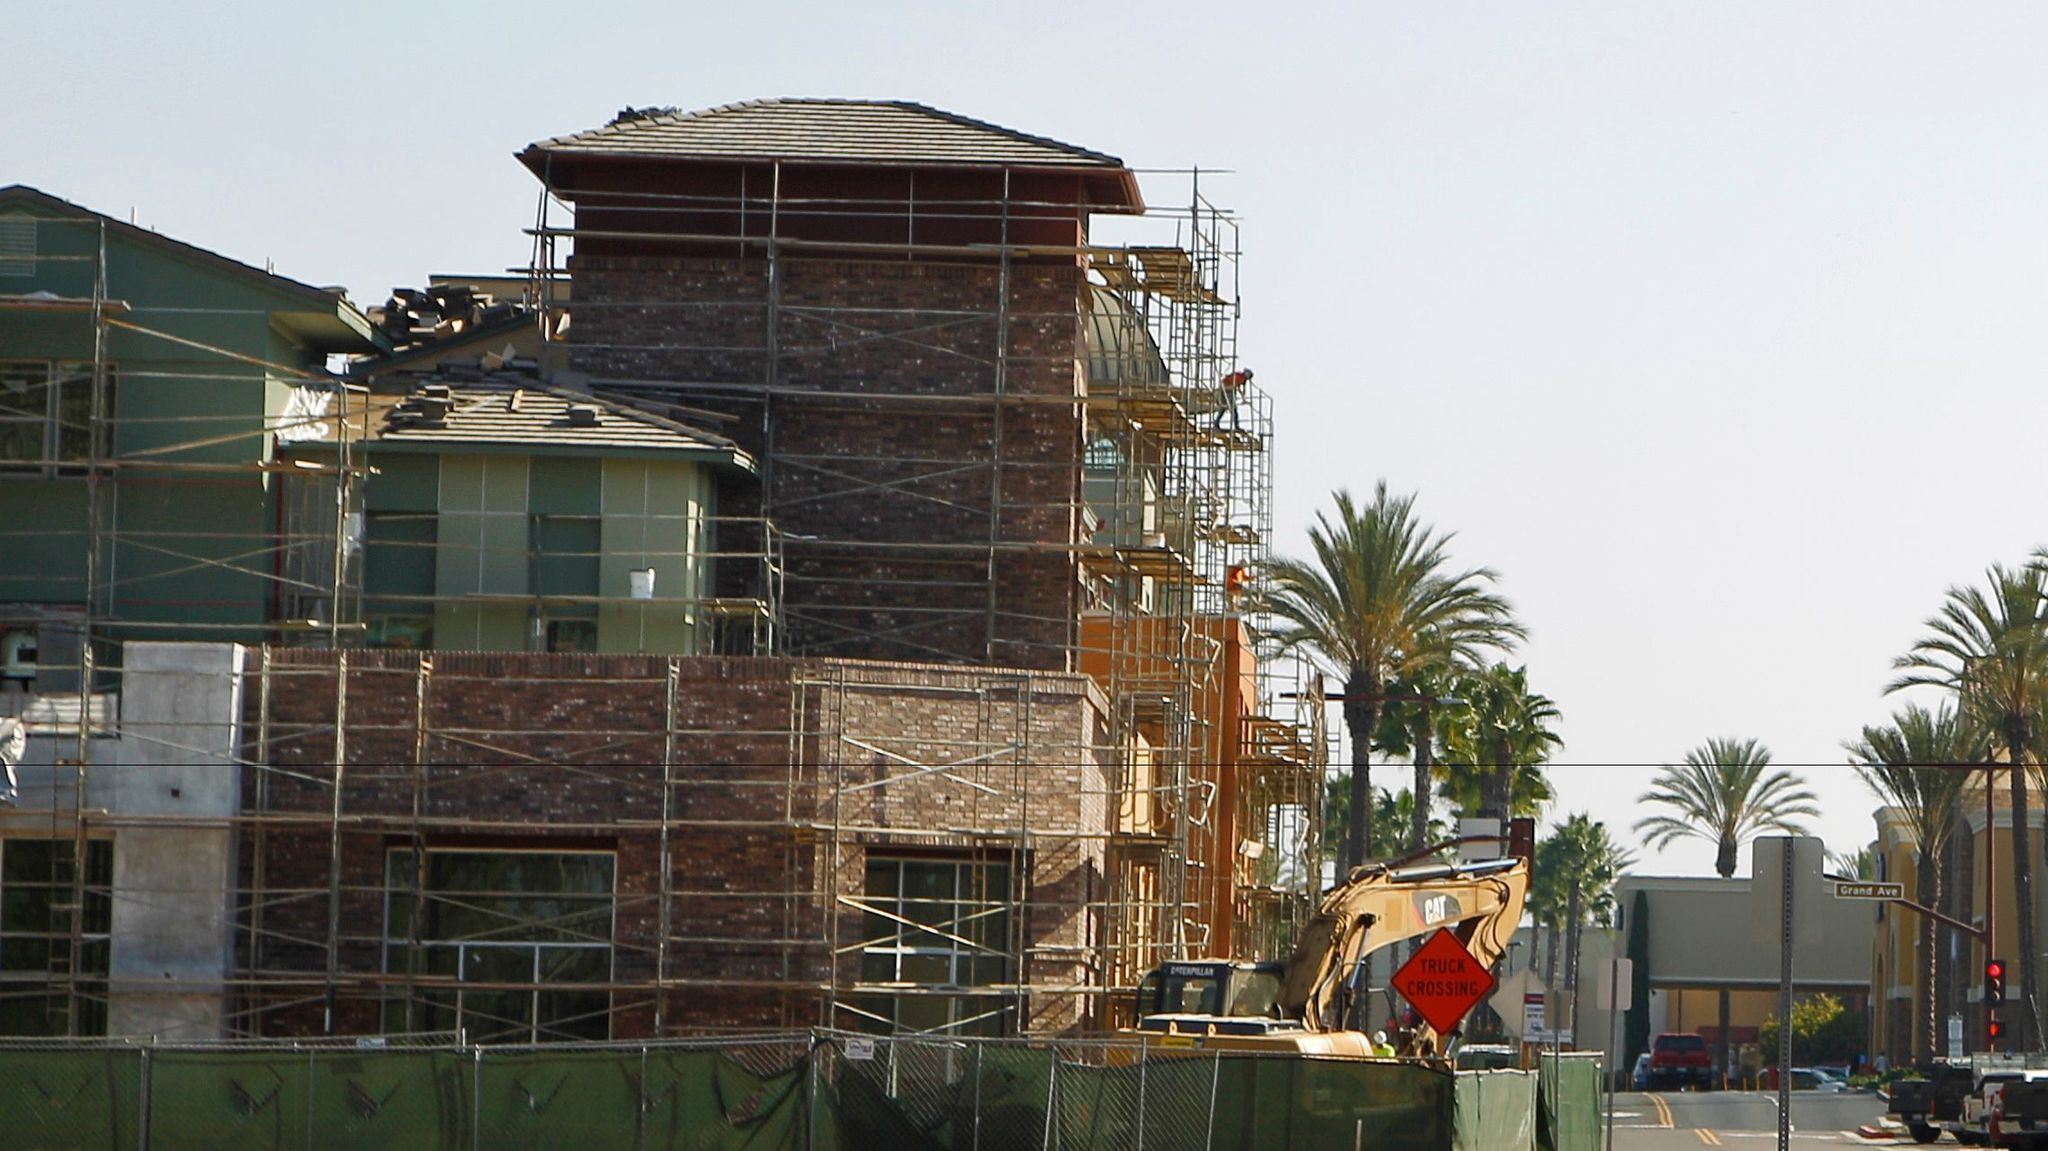 Trump budget: San Diego housing faces cuts - The San Diego Union-Tribune